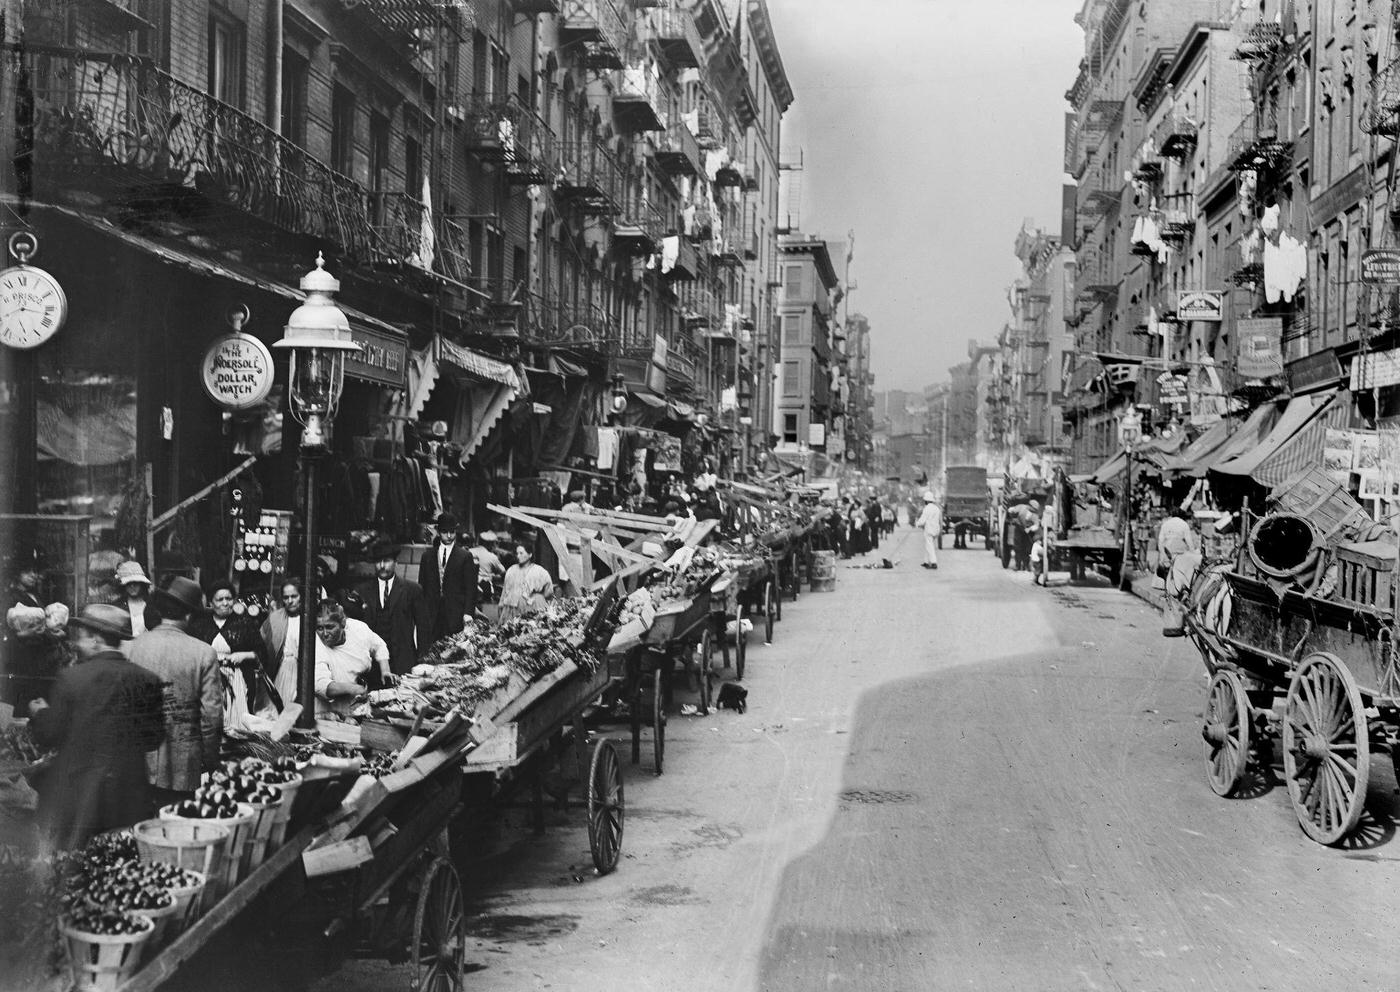 Italian Neighborhood With Street Market, Mulberry Street, 1900